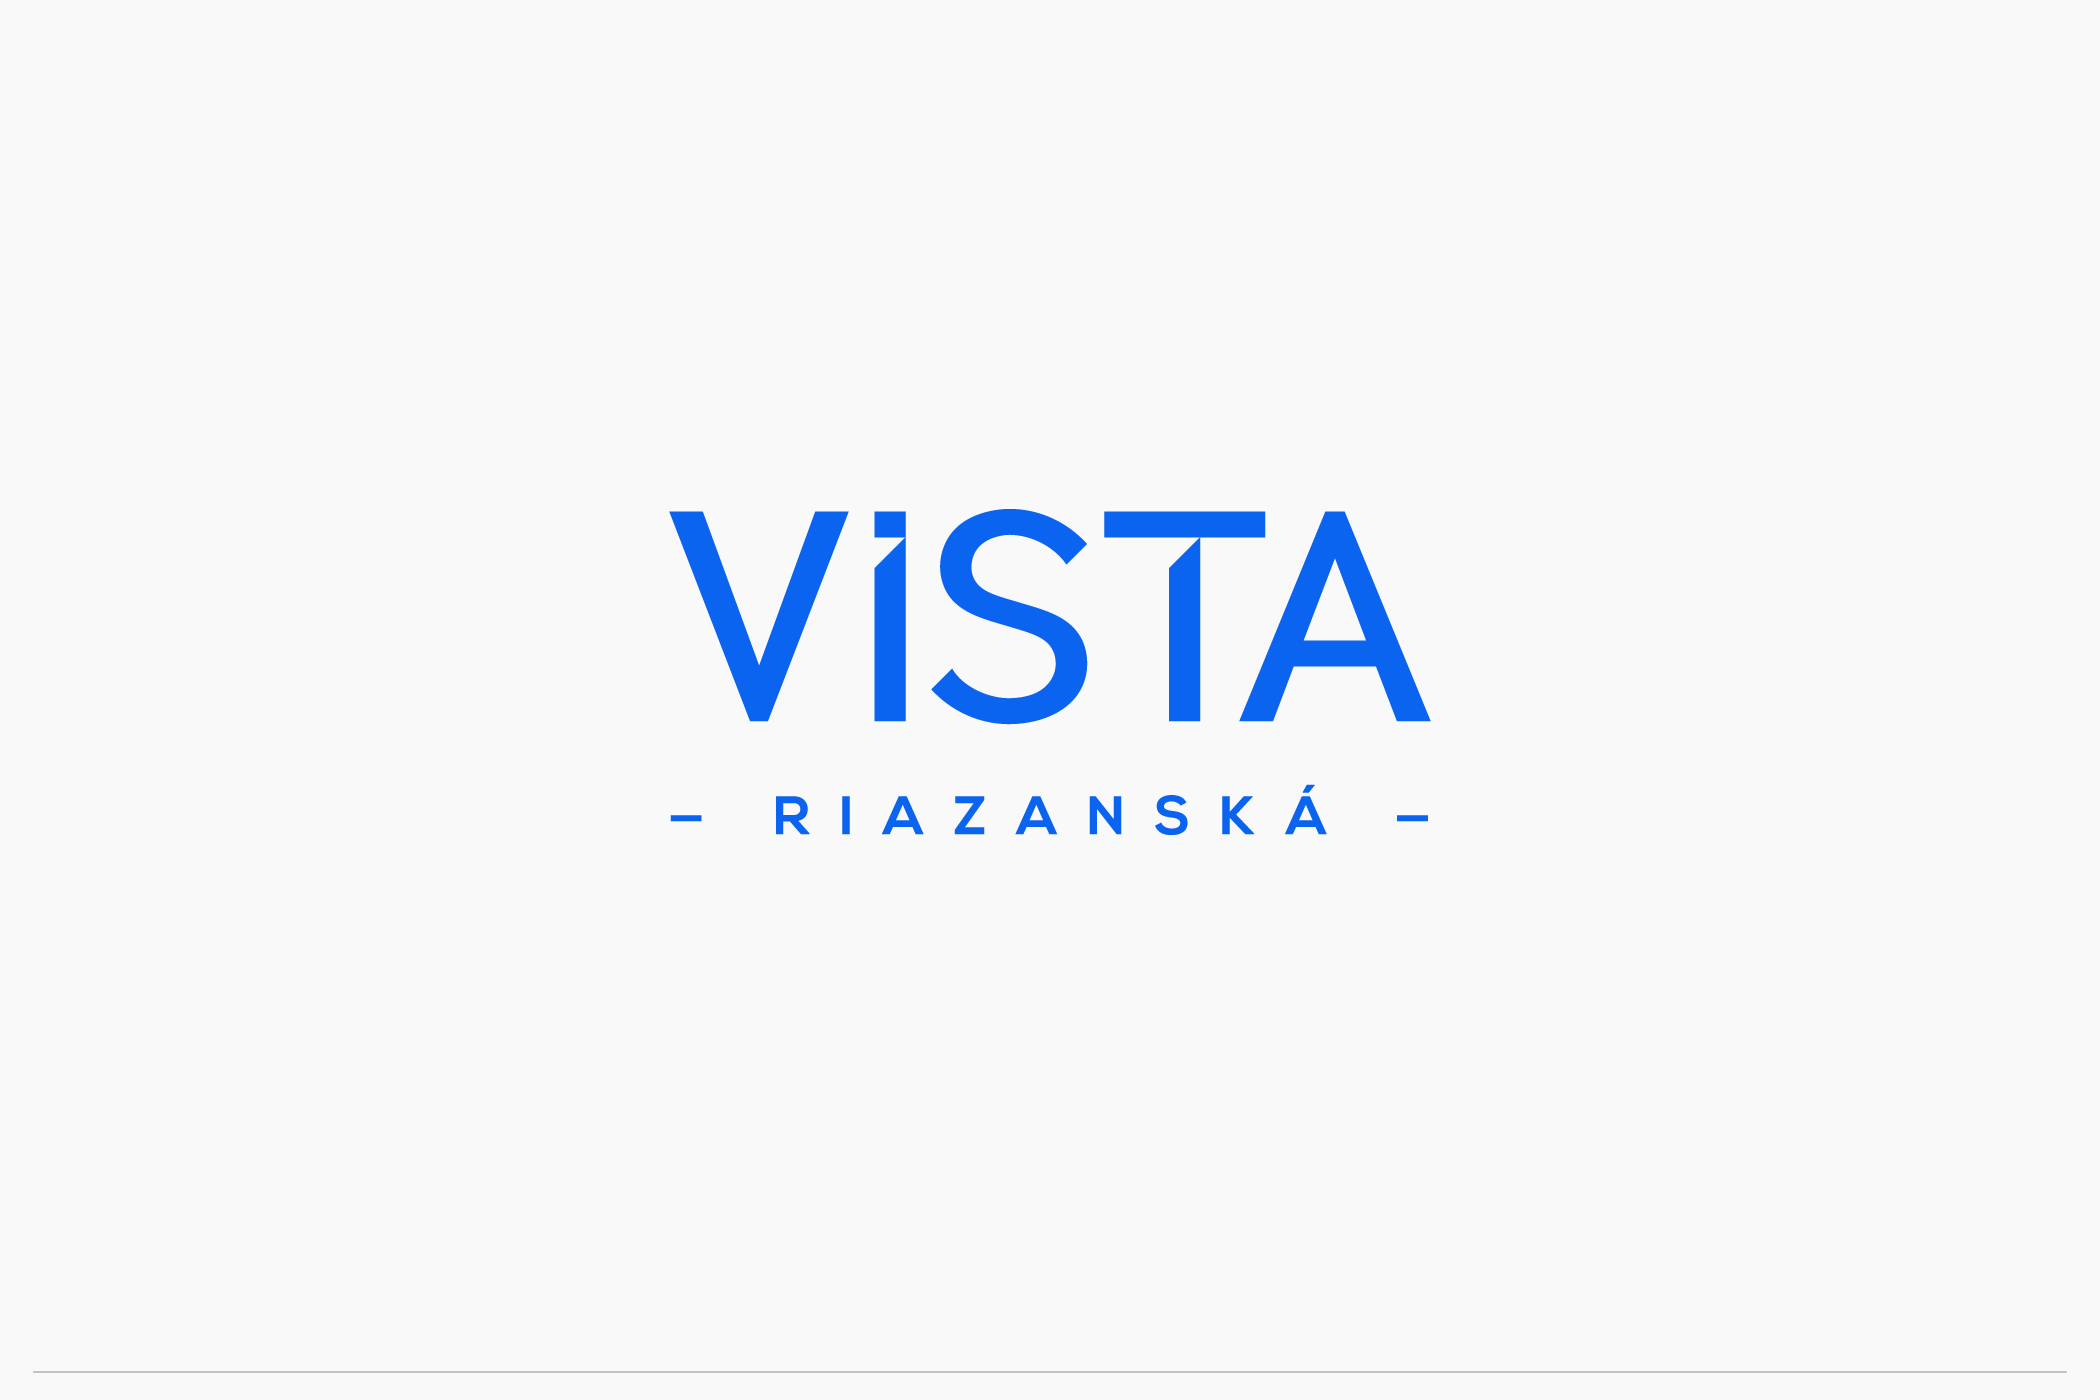 Logo Vista riazanska developer reality grafik slaavo